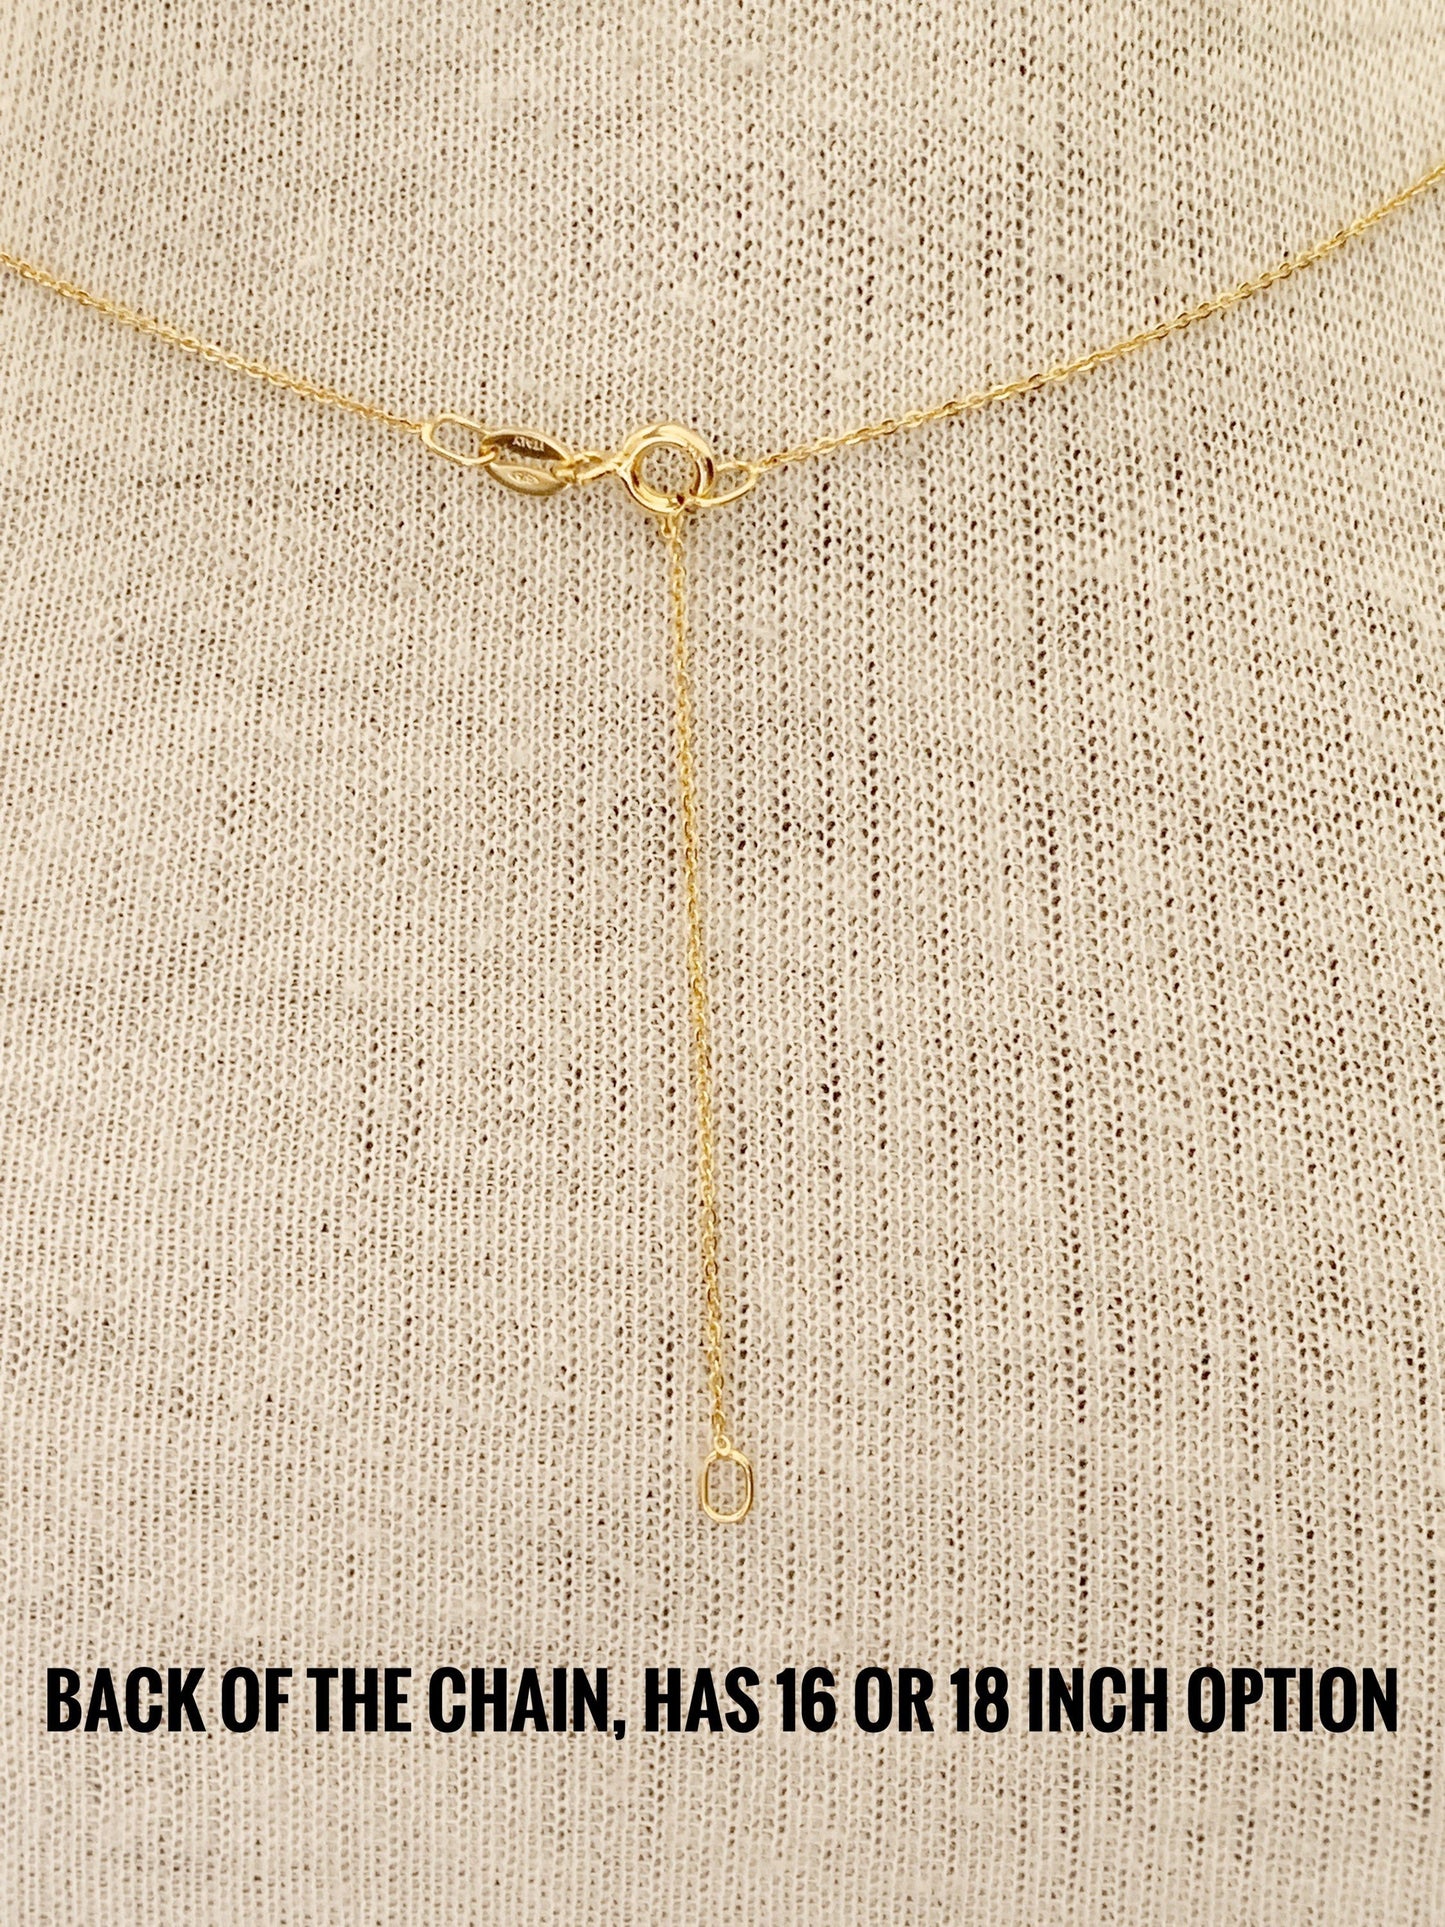 Vintage 9ct Gold Fancy Hearts Pattern Cross Necklace